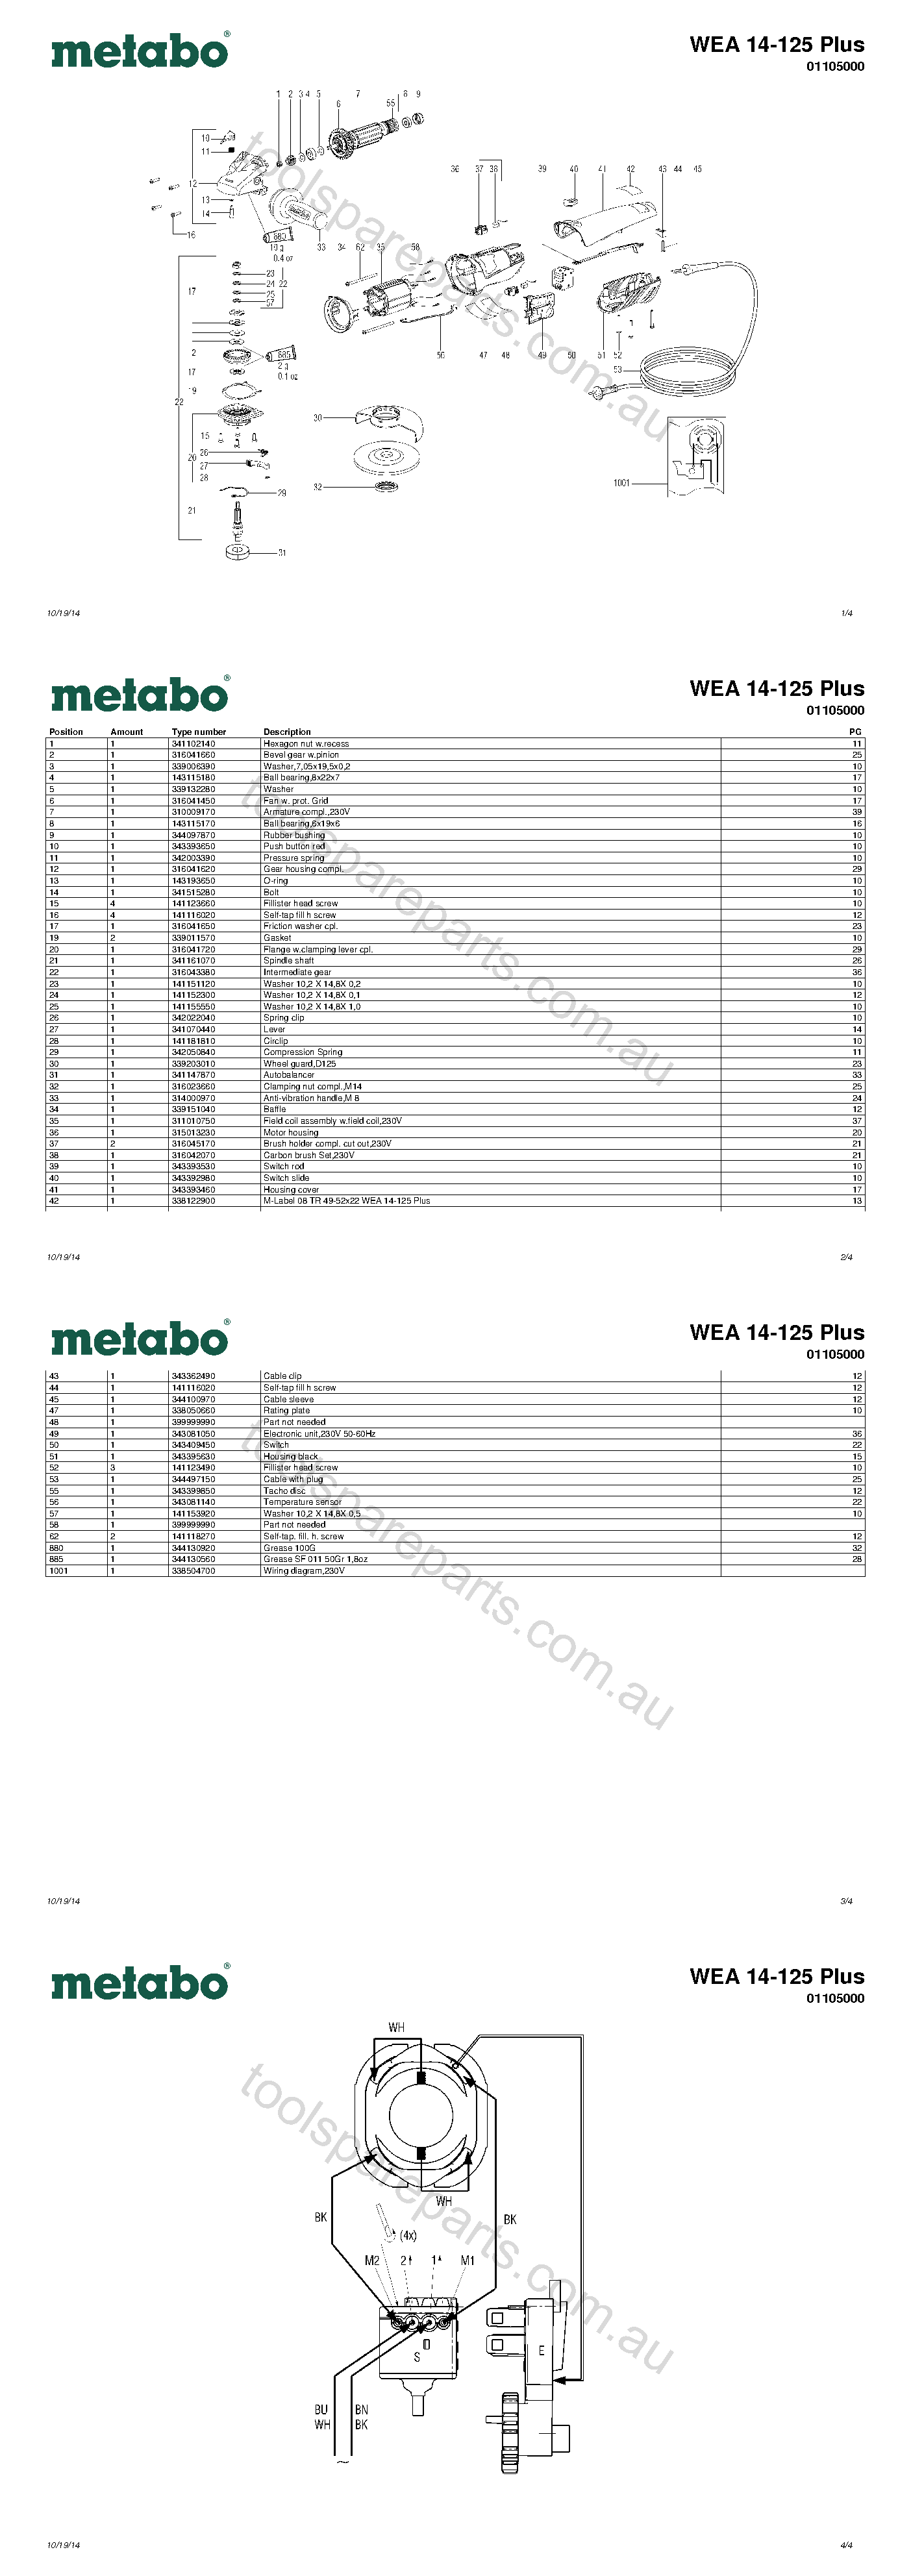 Metabo WEA 14-125 Plus 01105000  Diagram 1